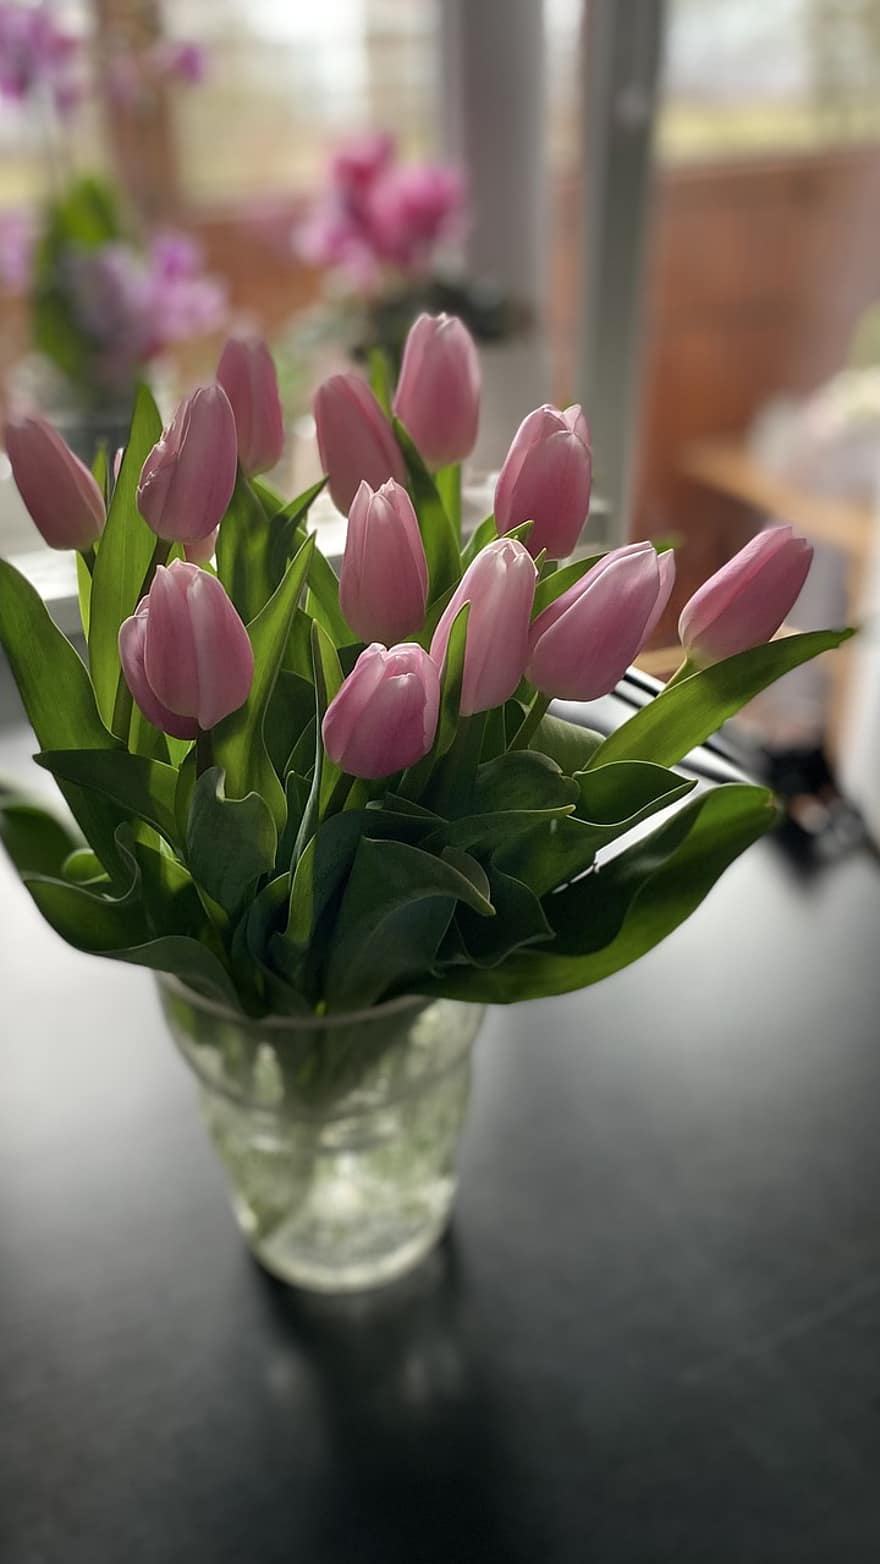 Flowers, Tulips, Bouquet, Plant, Vase, Spring, Mood, Botany, Bloom, tulip, flower